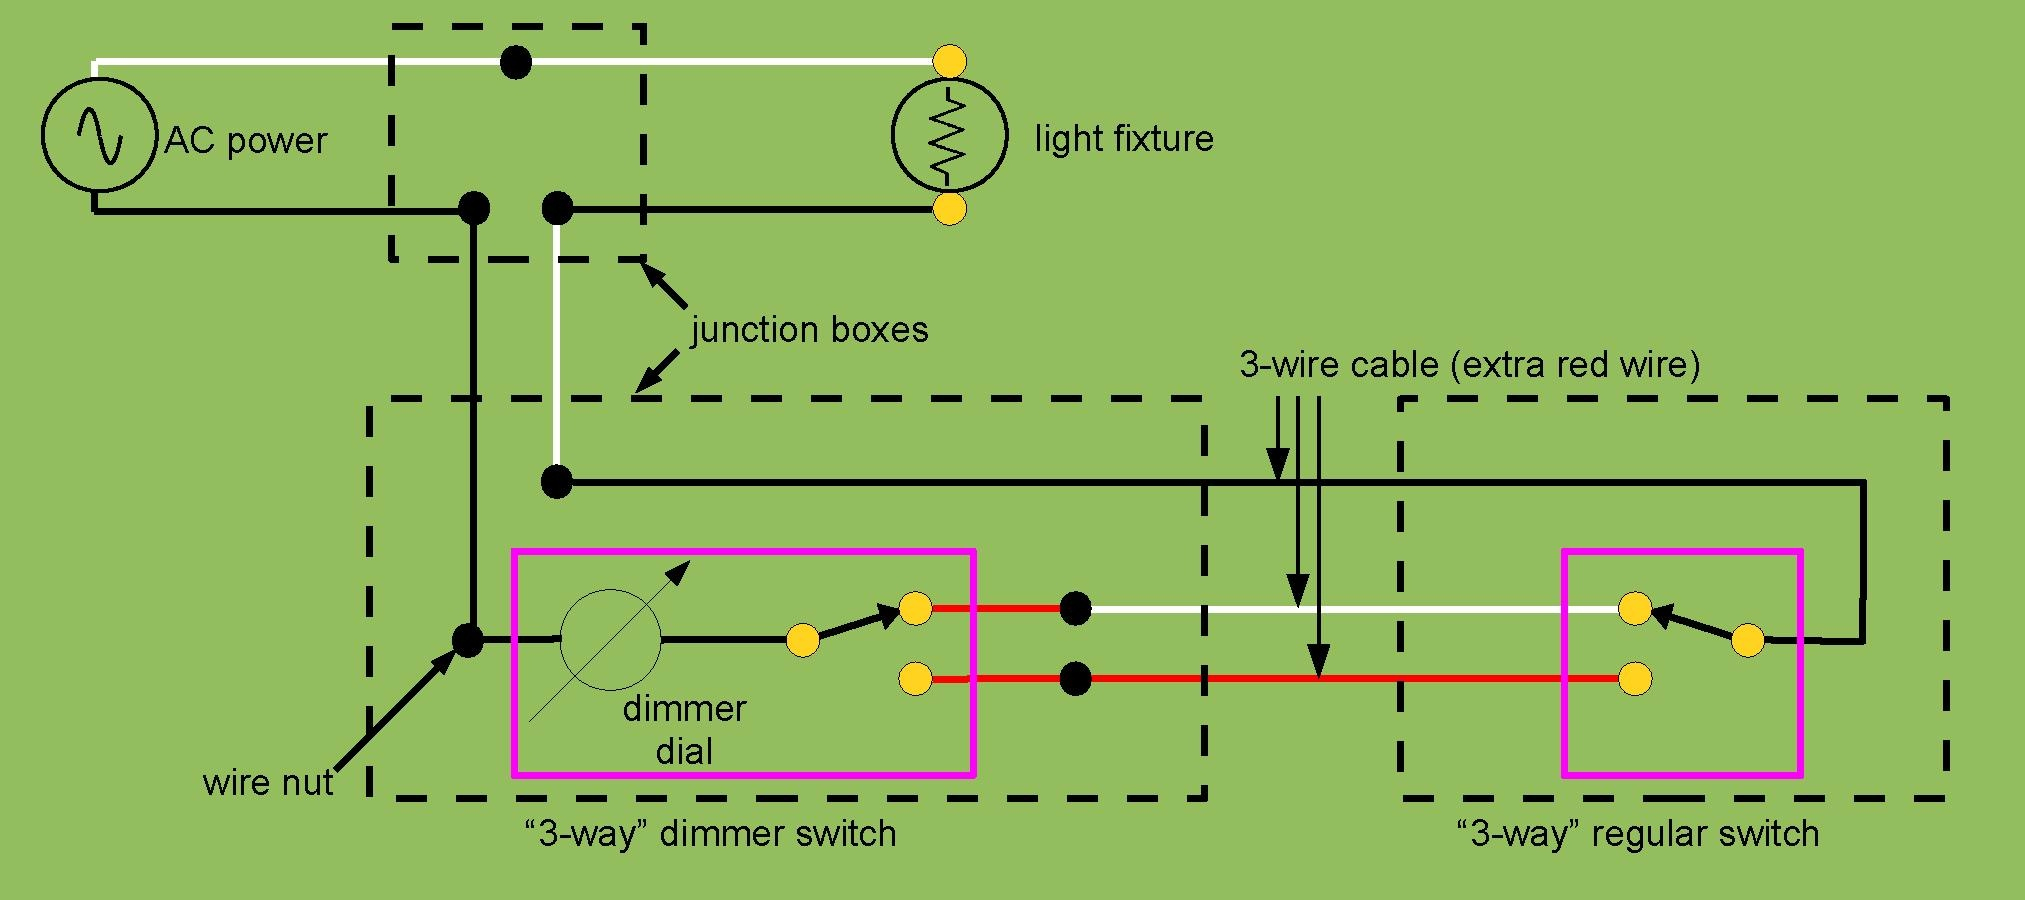 File:3-Way Dimmer Switch Wiring.pdf - Wikimedia Commons - 3 Way Switch Wiring Diagram Pdf